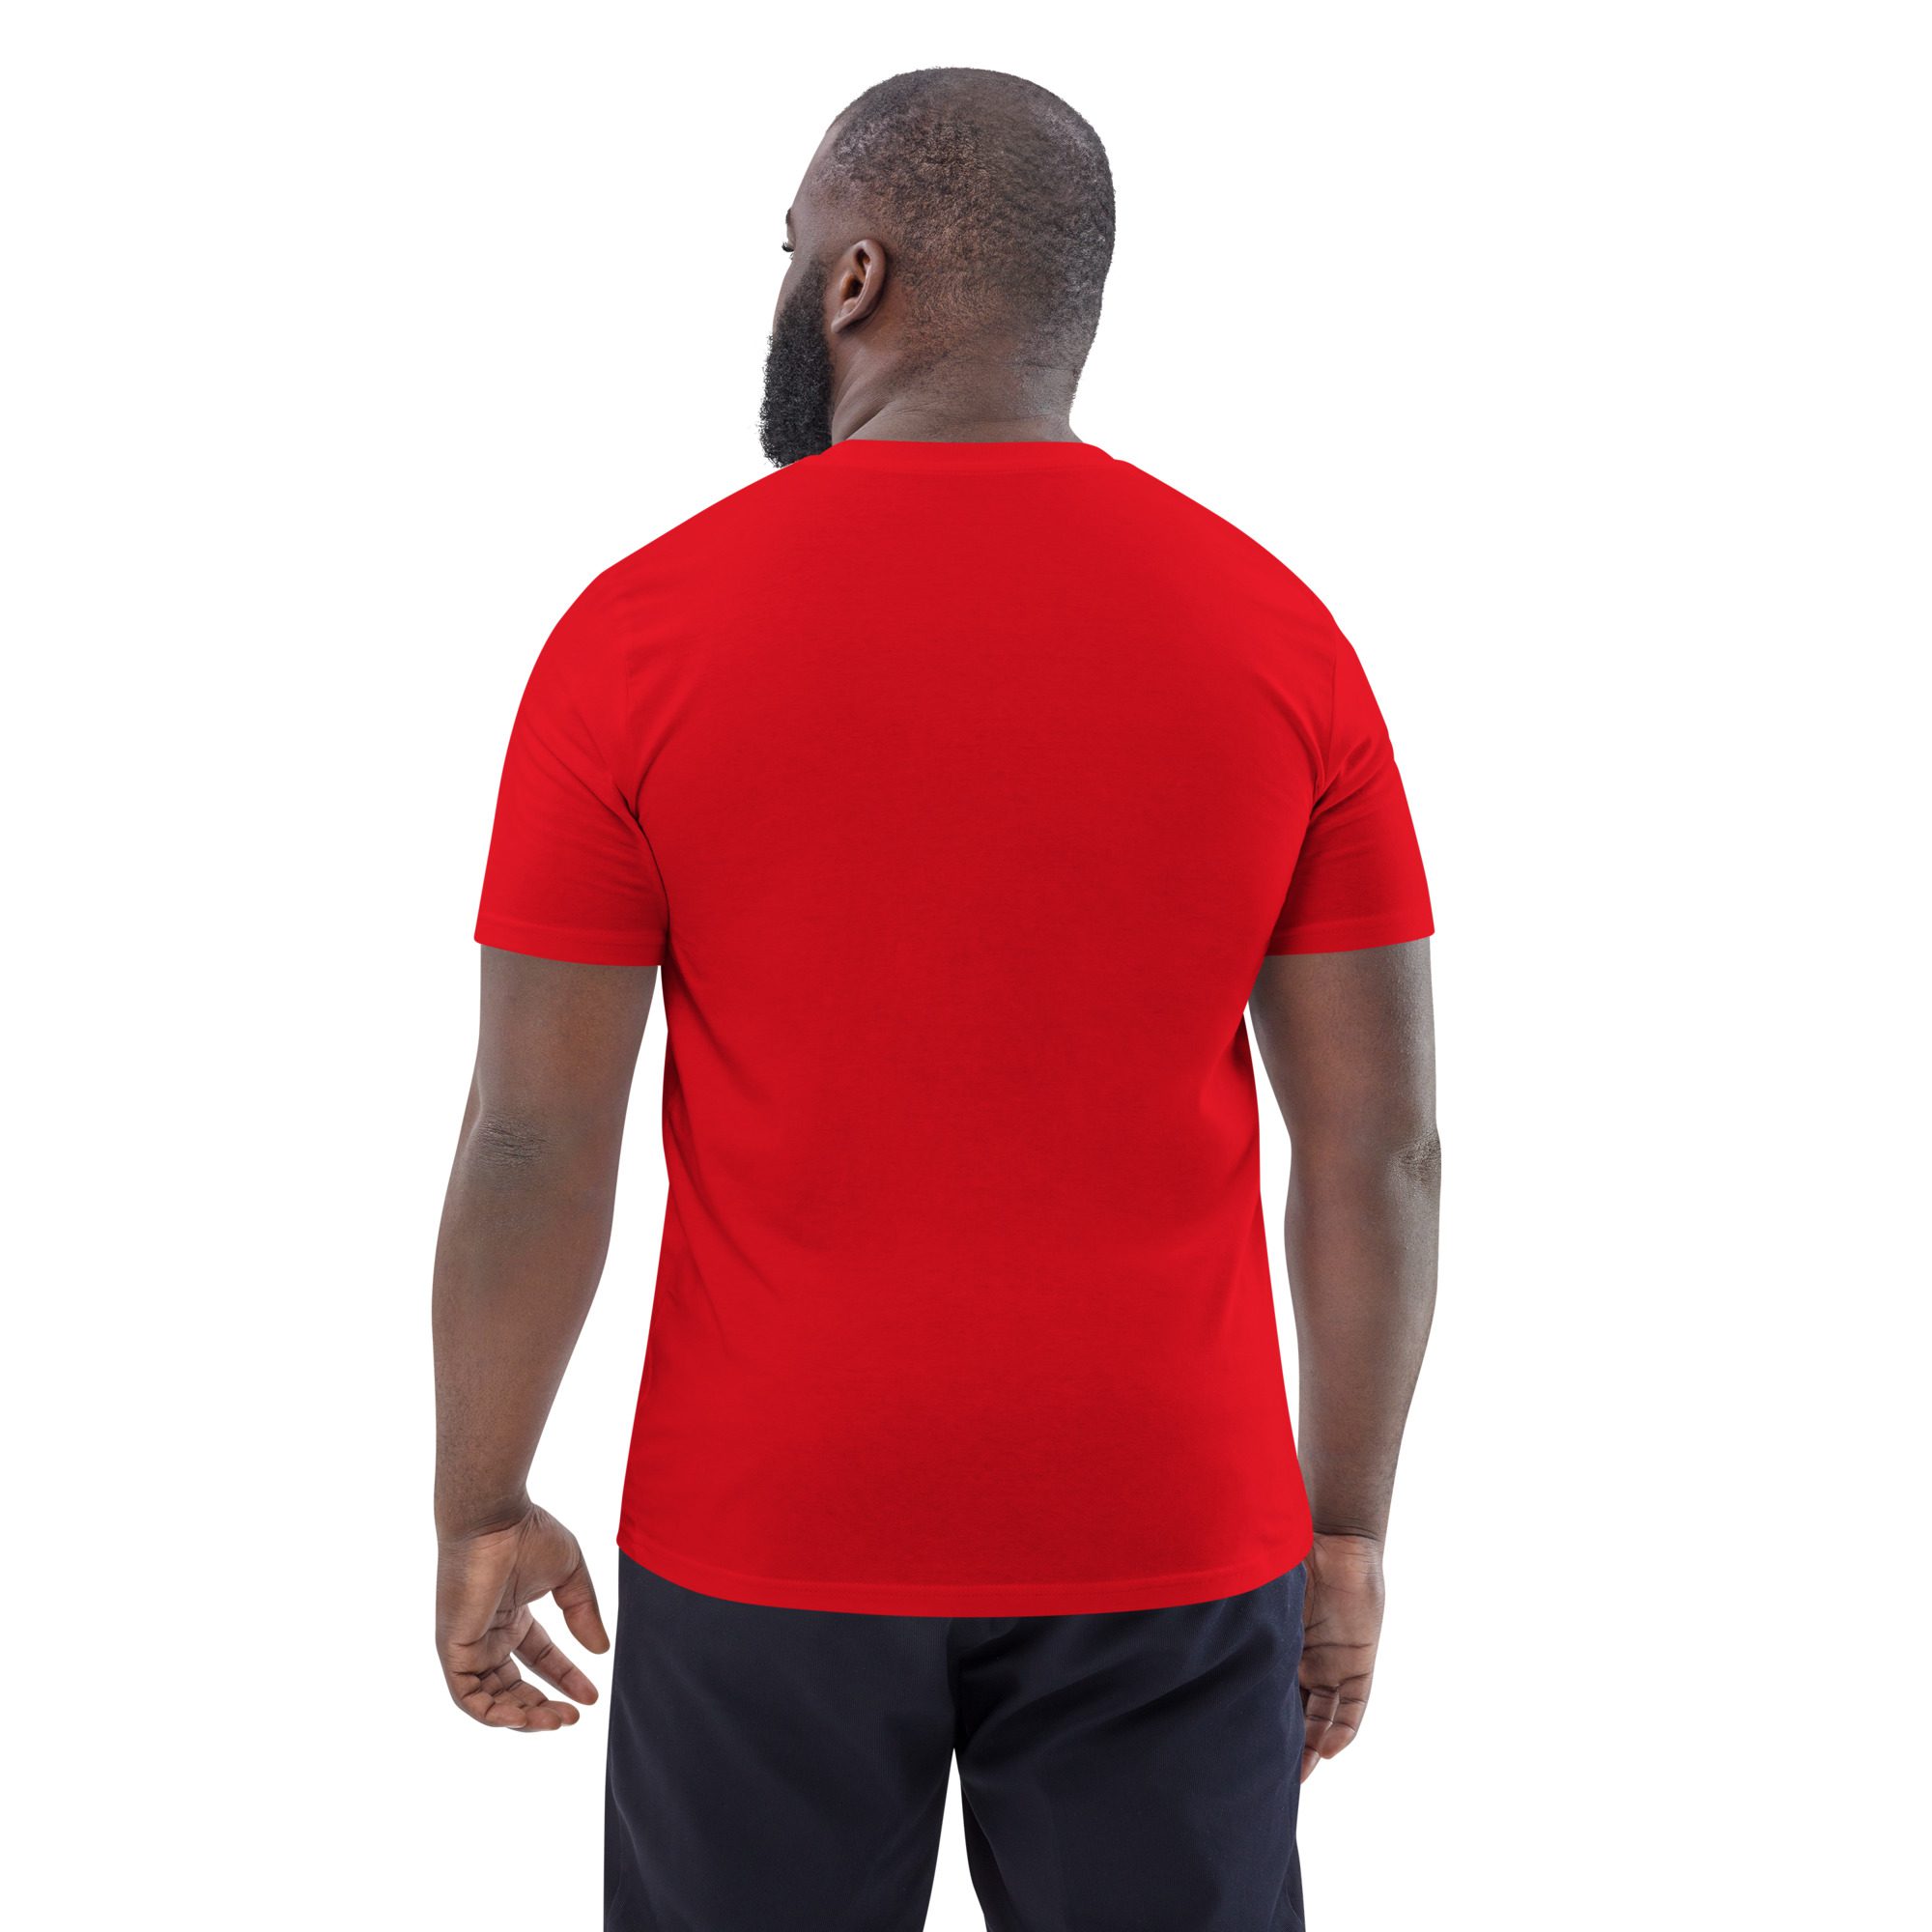 unisex organic cotton t shirt red back 651ada938bdd2